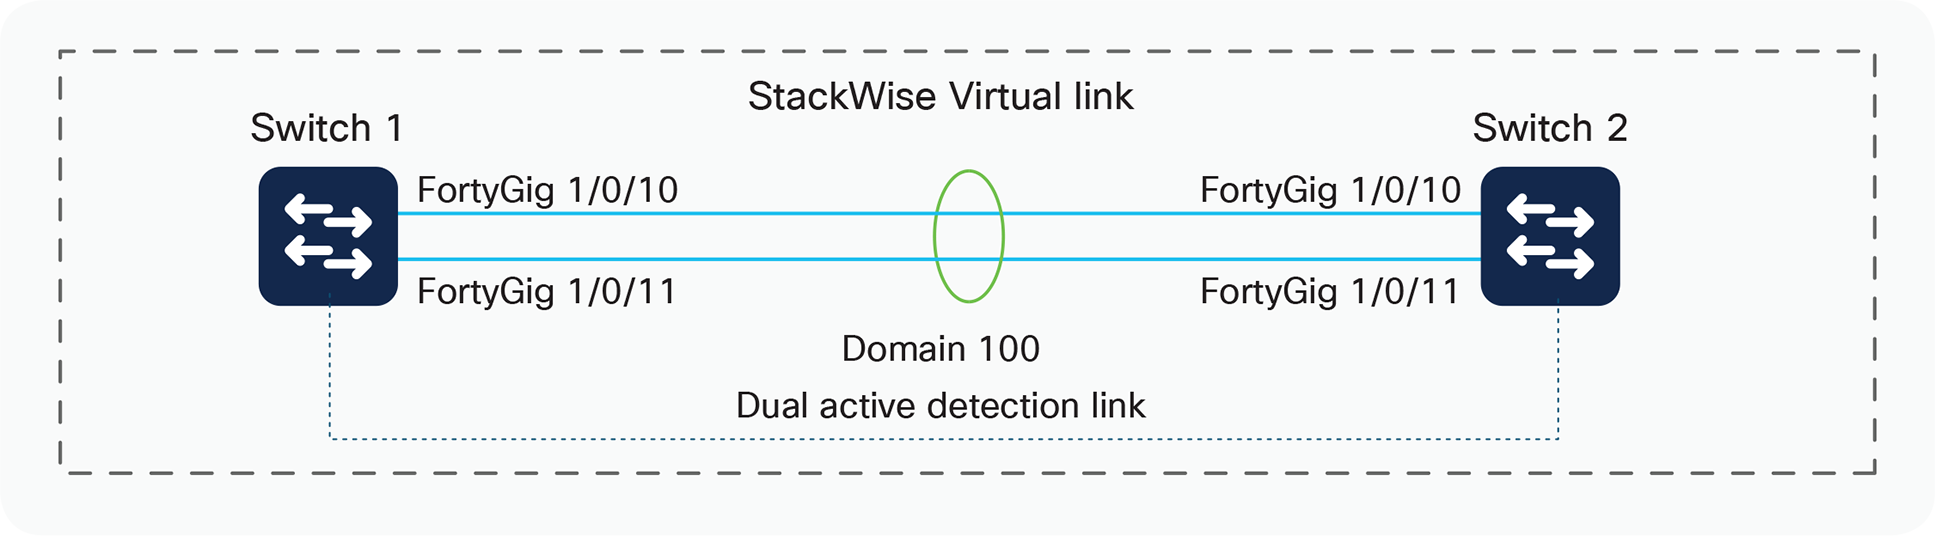 StackWise Virtual conversion